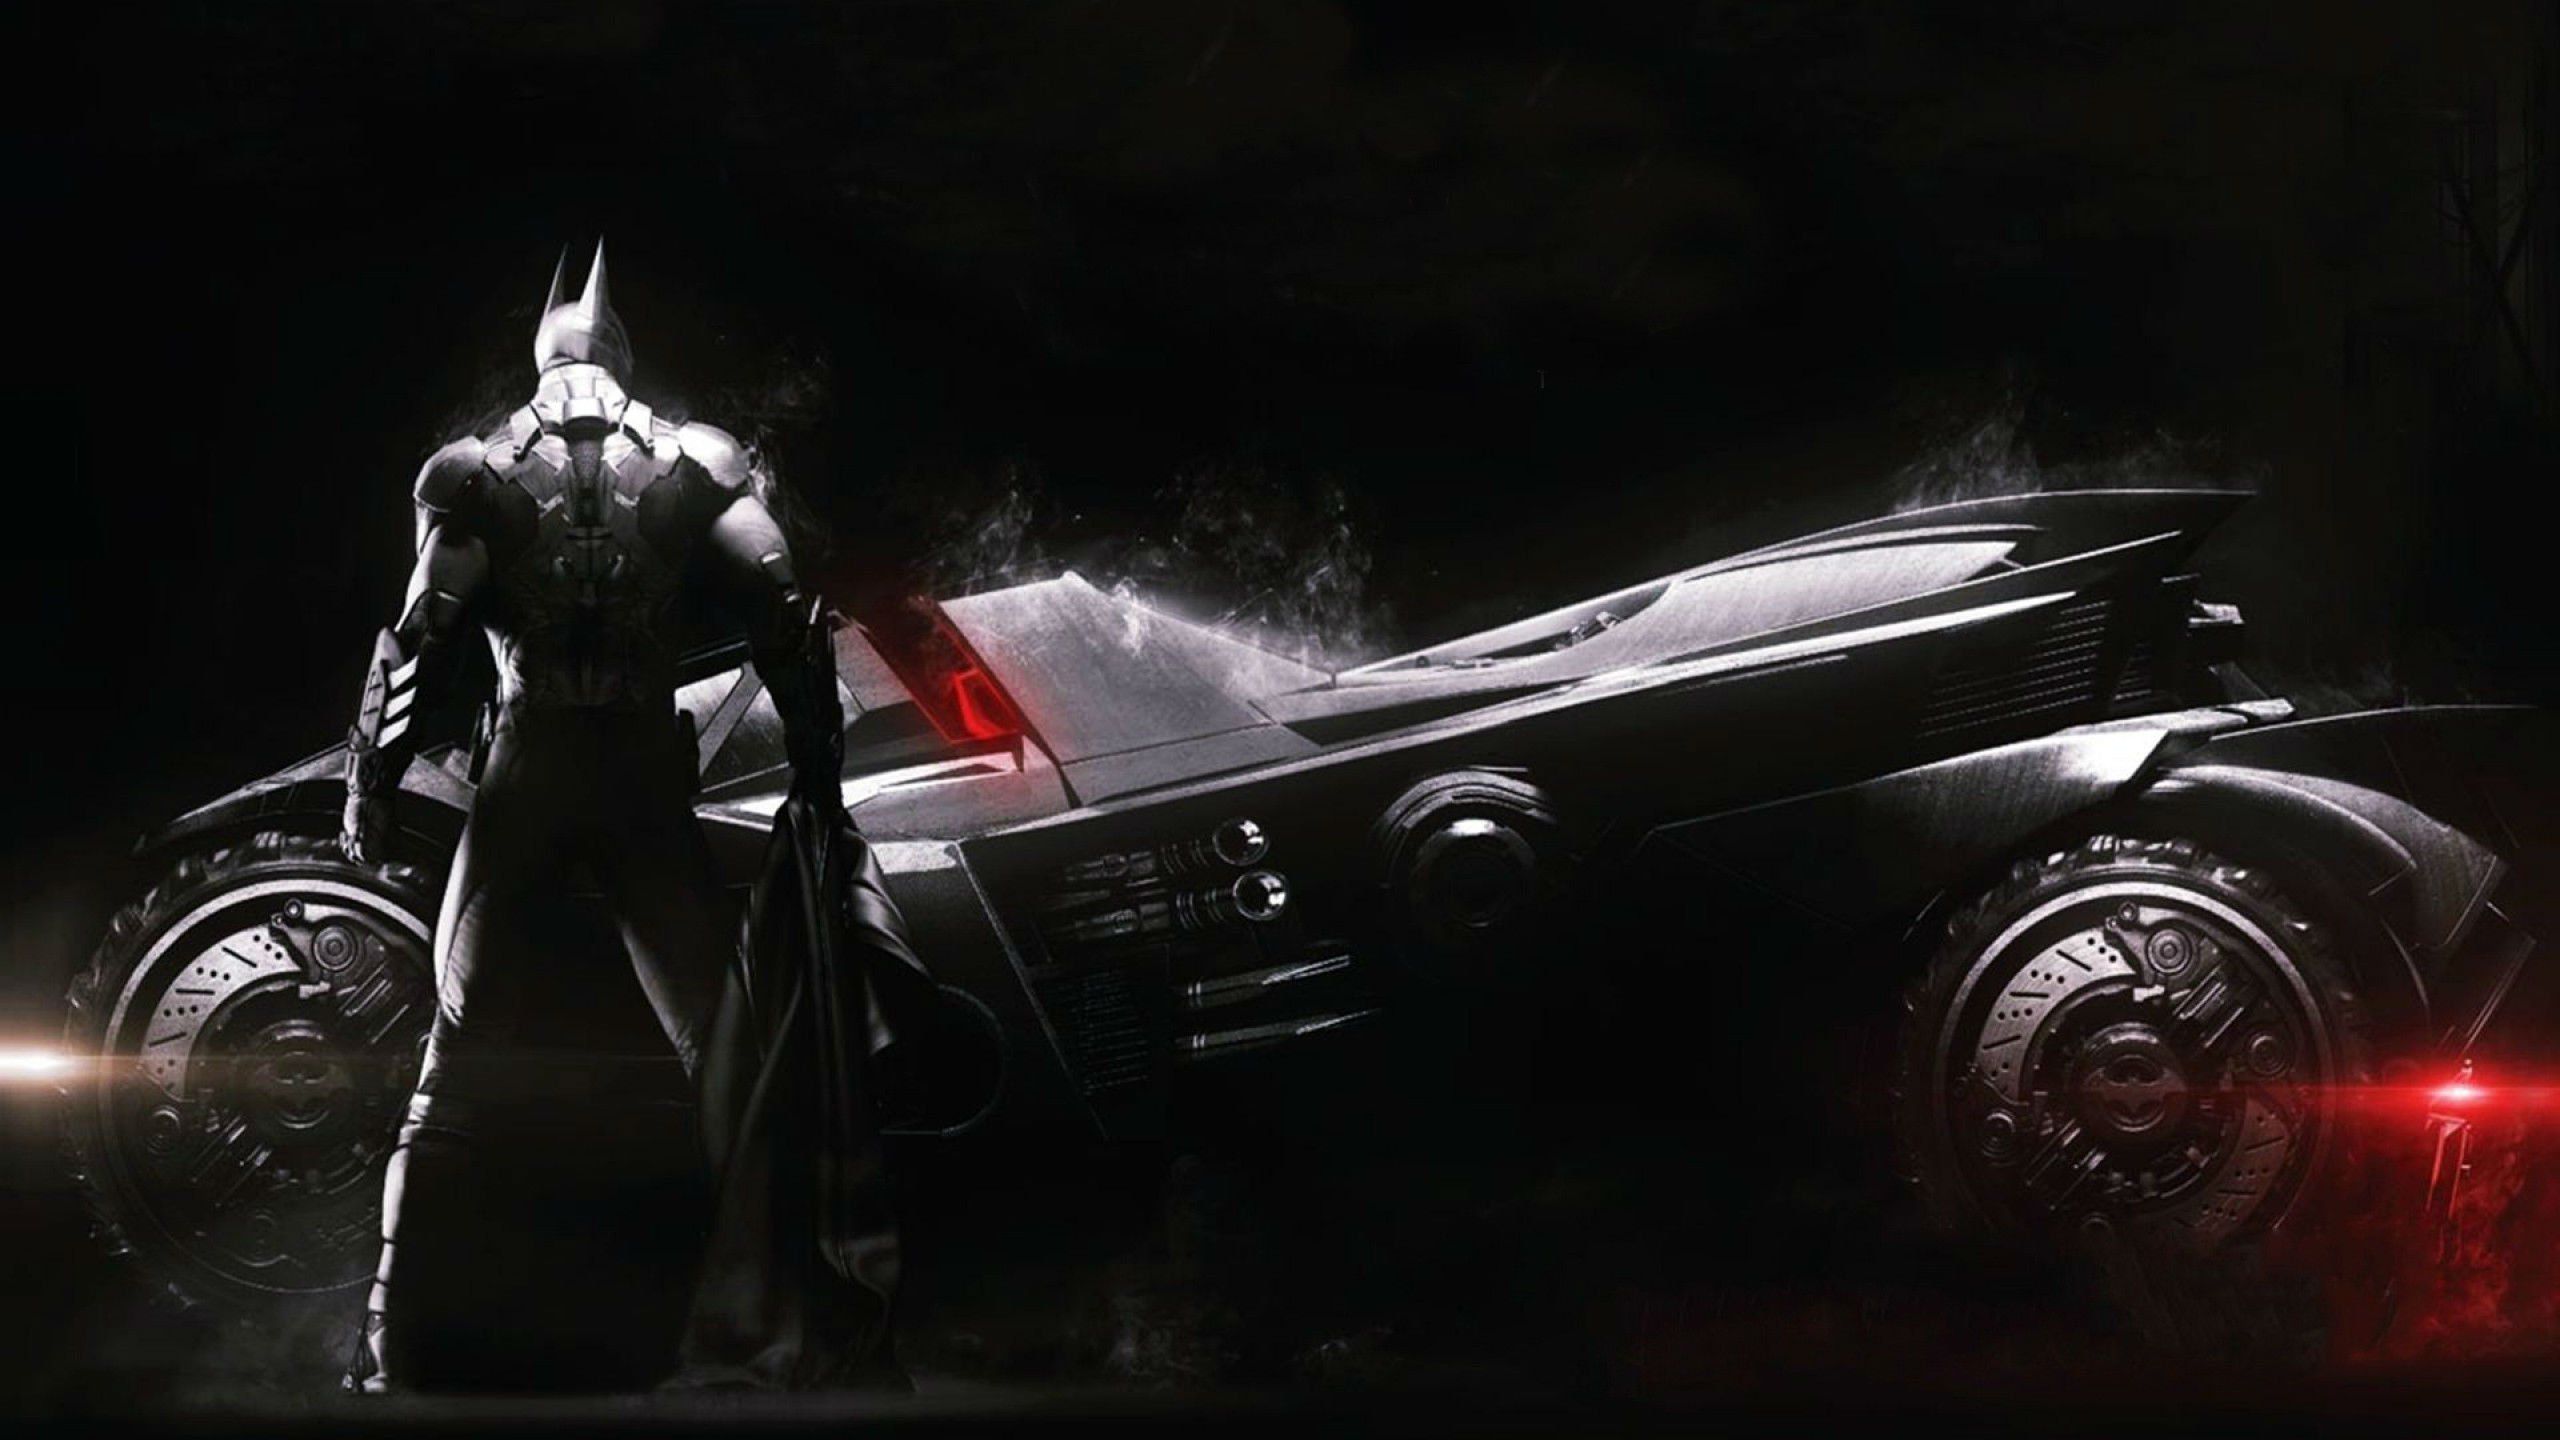 Free download Batman Arkham Knight Image [2560x1440] for your Desktop, Mobile & Tablet. Explore Batman Cars Wallpaper. Batman Cars Wallpaper, Wallpaper Cars, Cars Wallpaper